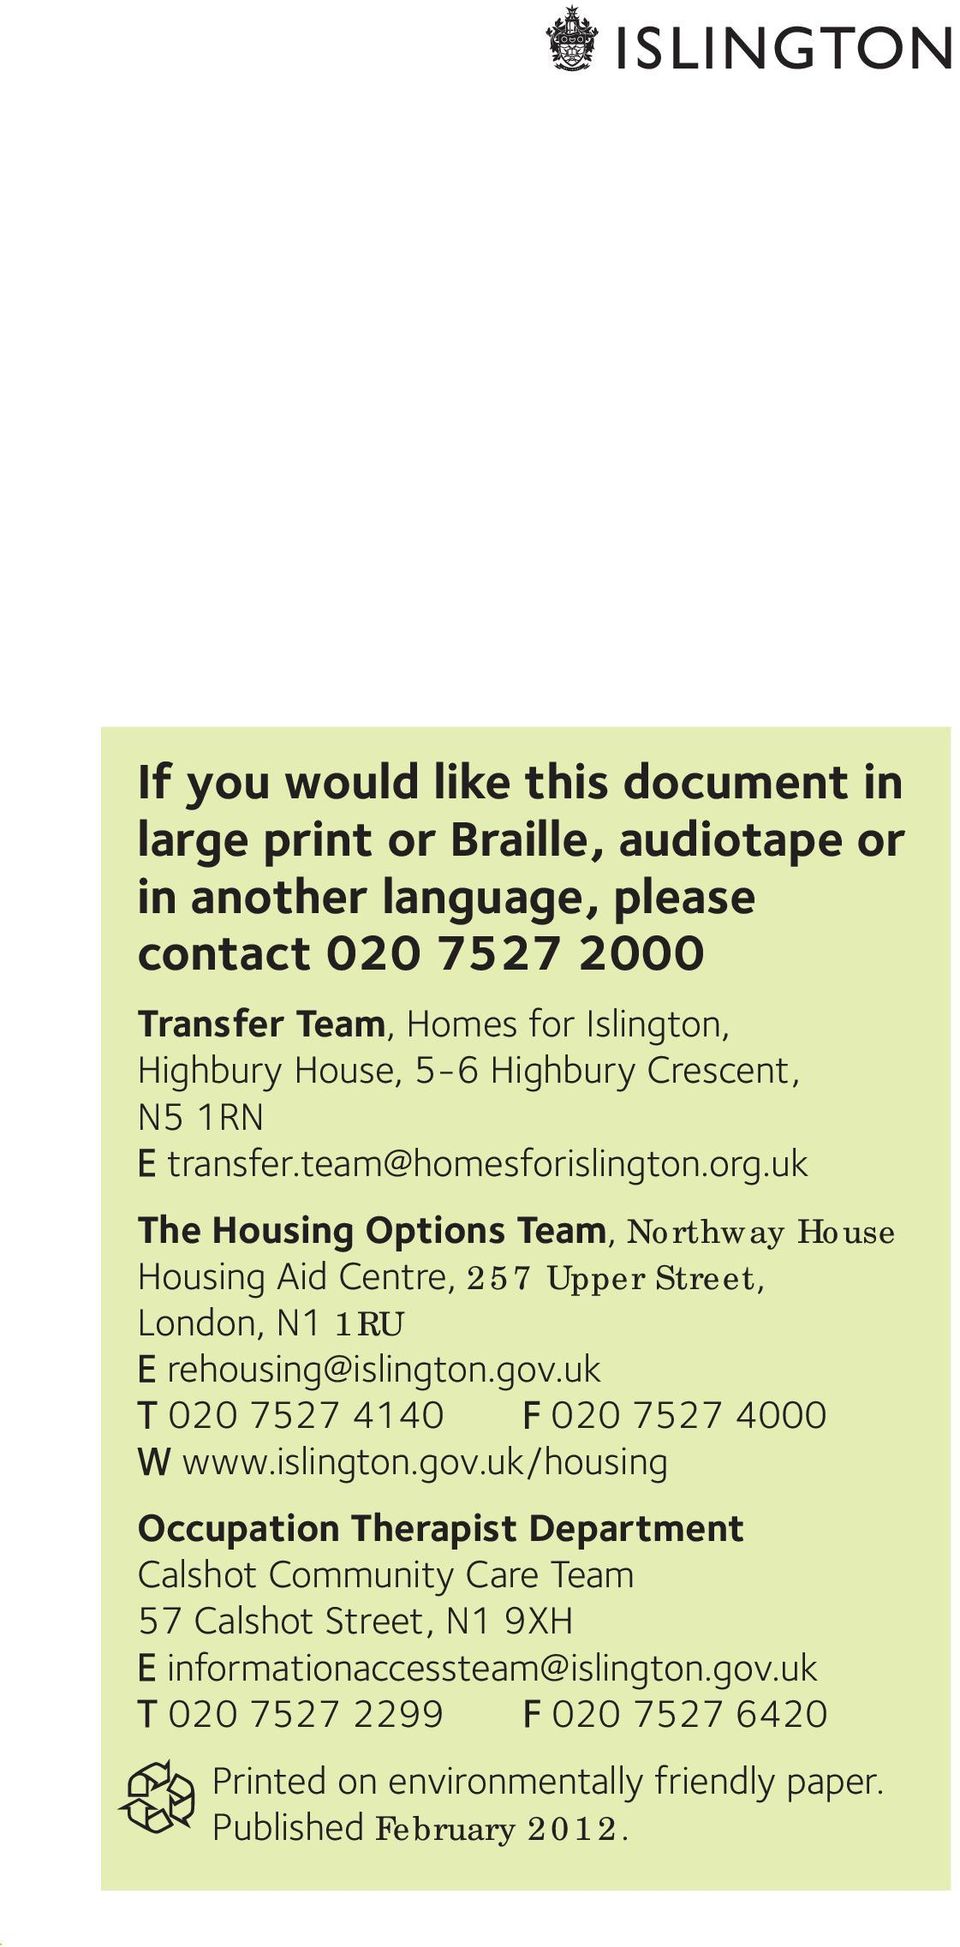 uk The Housing Options Team, Northway House Housing Aid Centre, 257 Upper Street, London, N1 1RU E rehousing@islington.gov.